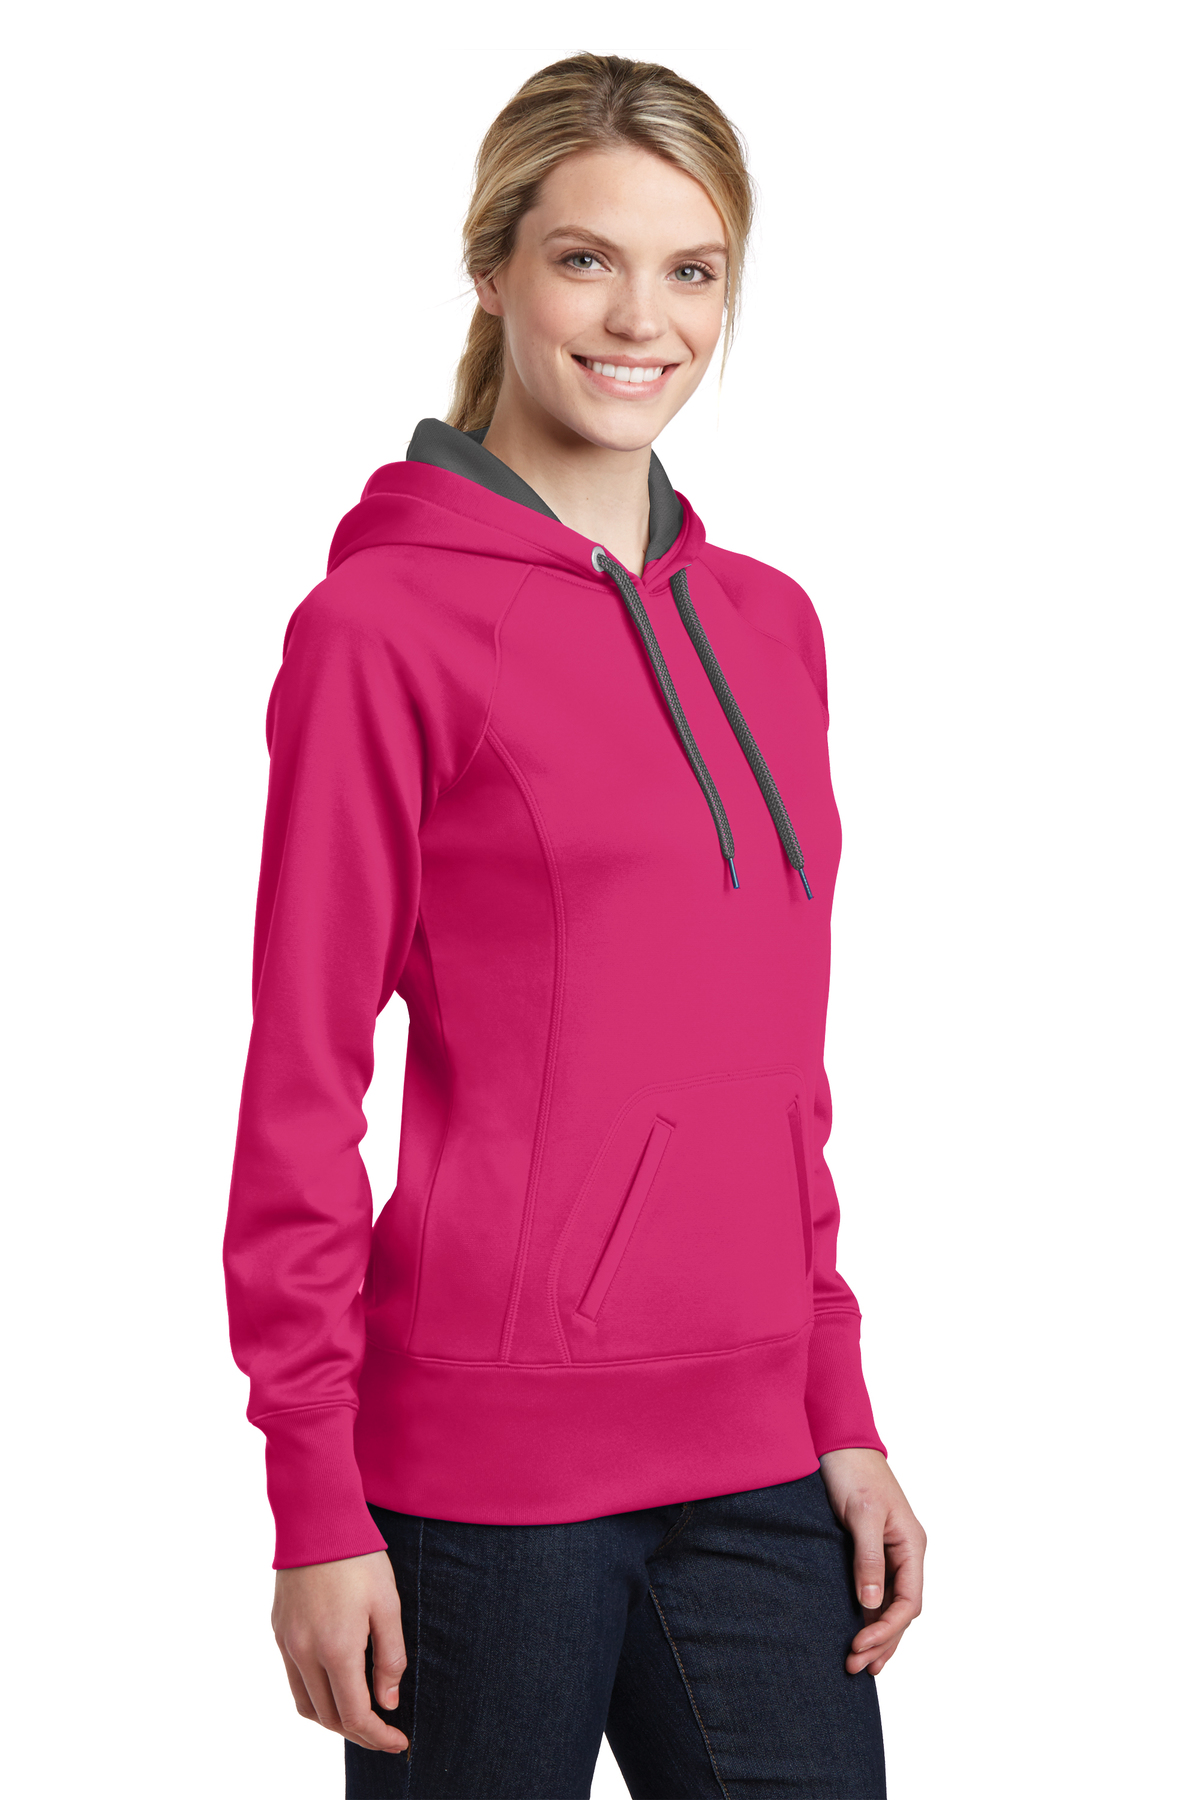 Sport-Tek Ladies Tech Fleece Hooded Sweatshirt | Product | SanMar